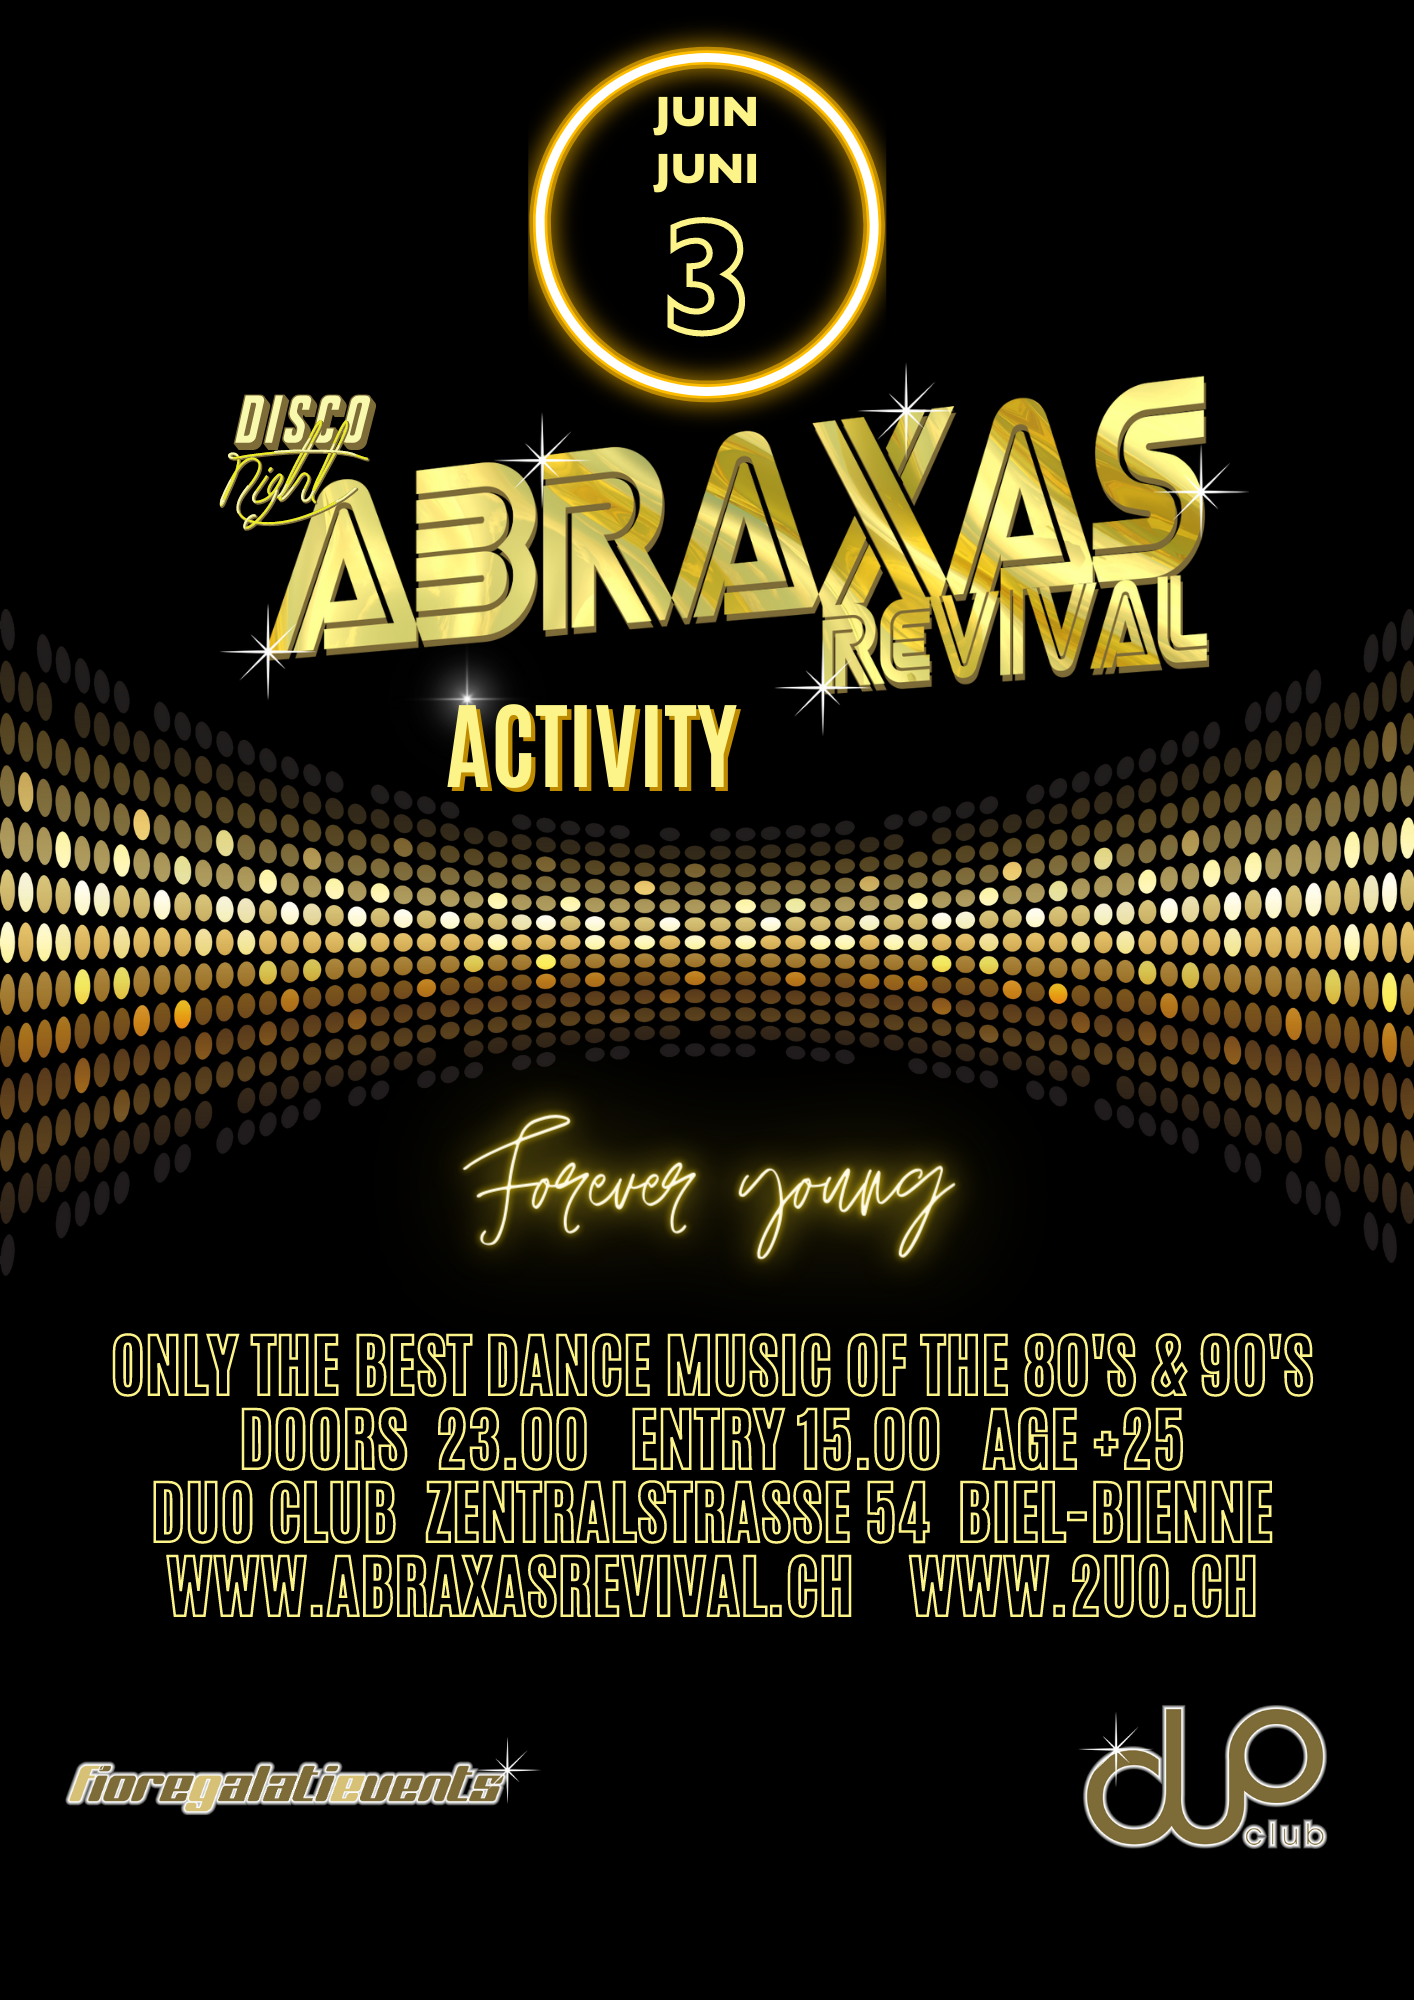 Abraxas Revival Duo Club